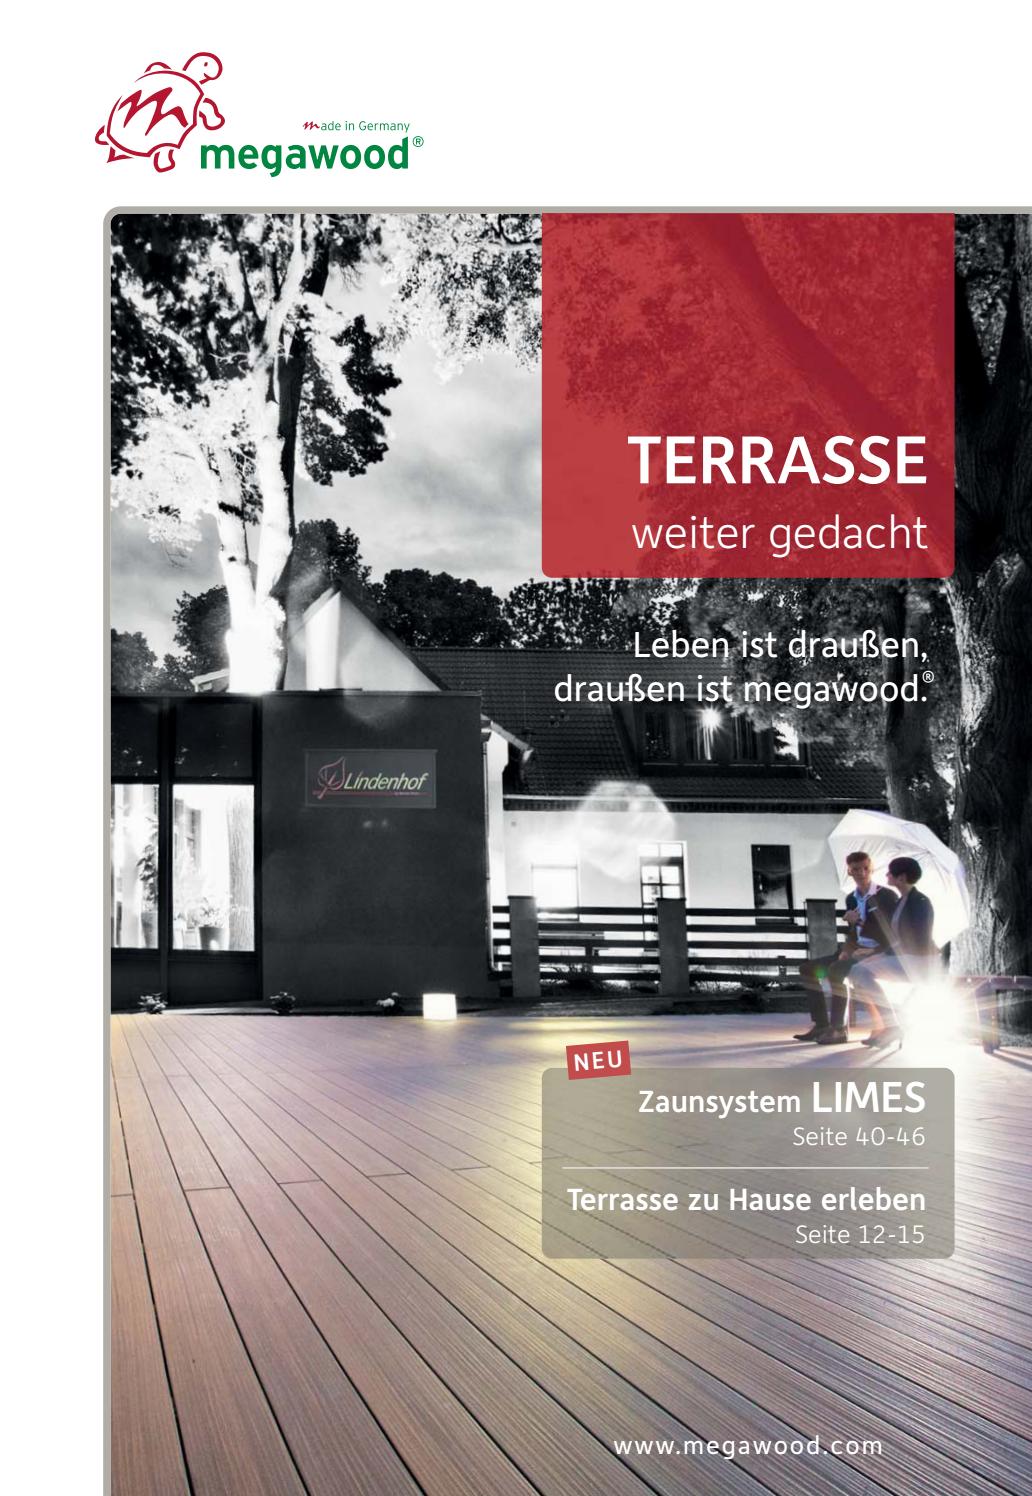 Terrassenplanung Ideen Neu Das Megawood Magazin by Heinze Gmbh issuu